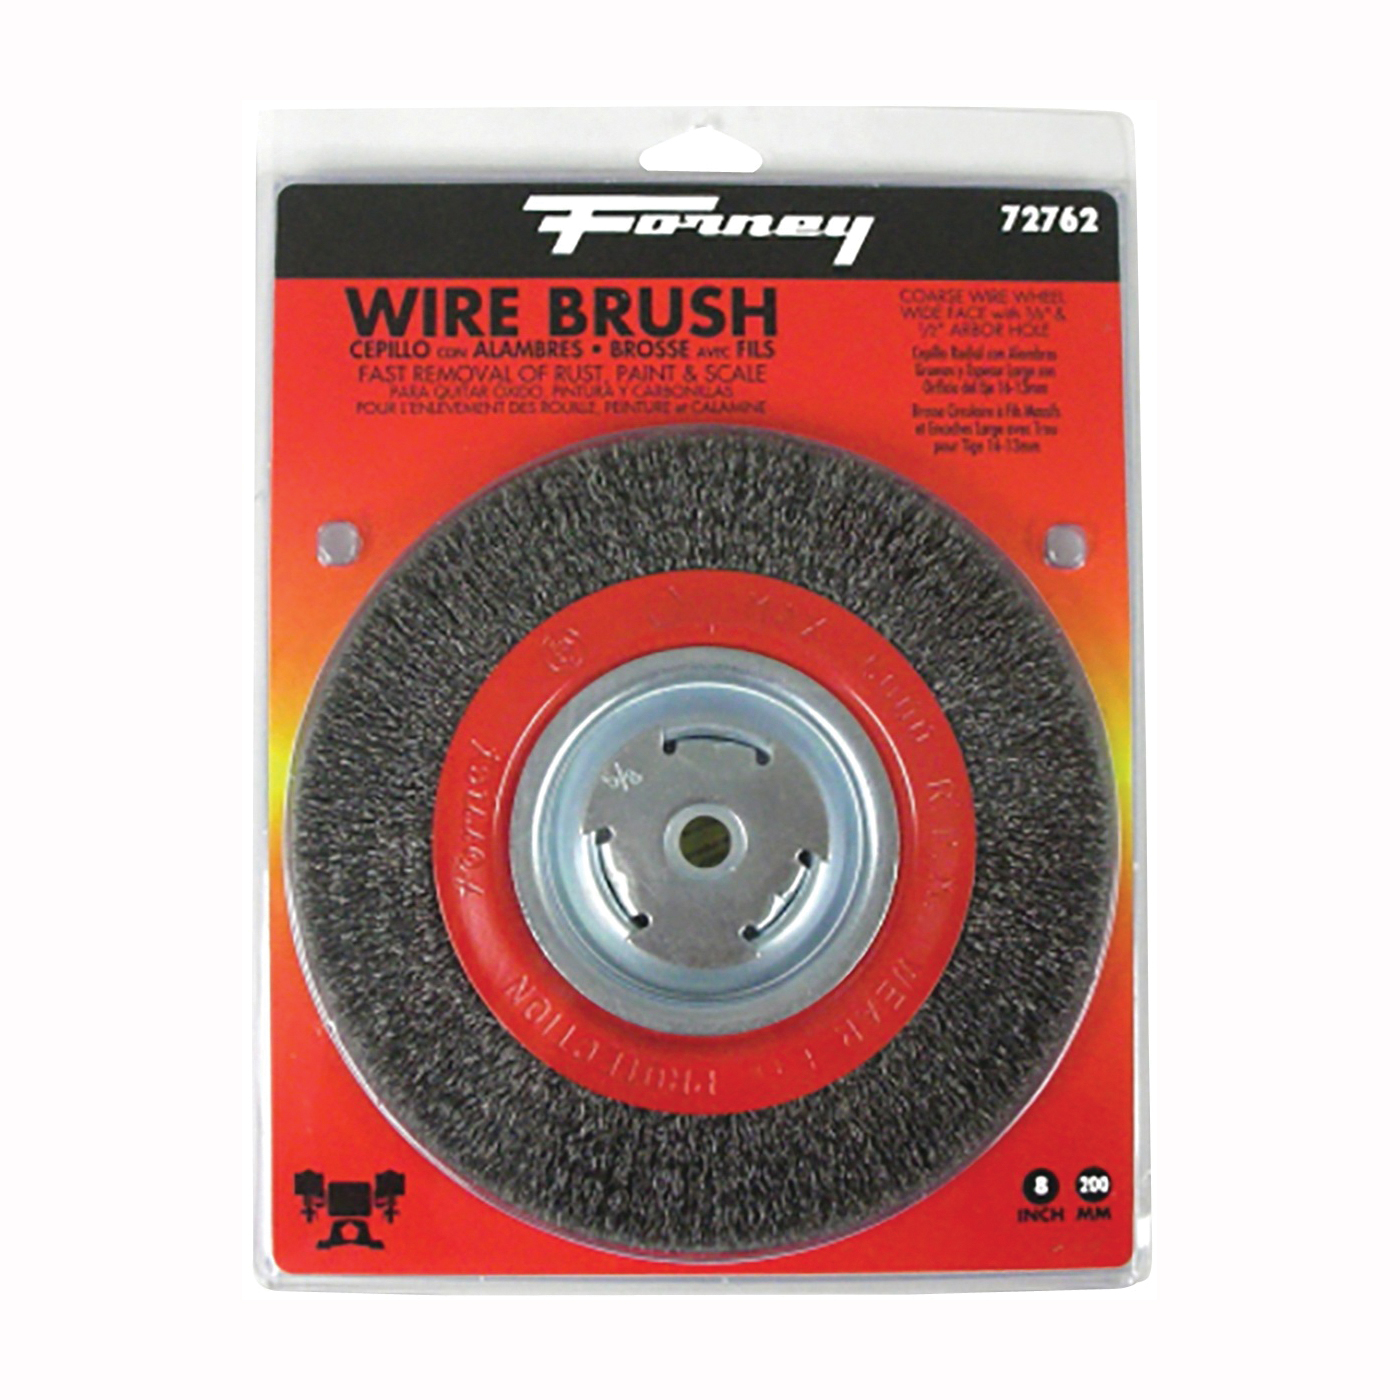 72762 Wire Bench Wheel Brush, 8 in Dia, 1/2 to 5/8 in Arbor/Shank, 0.014 in Dia Bristle